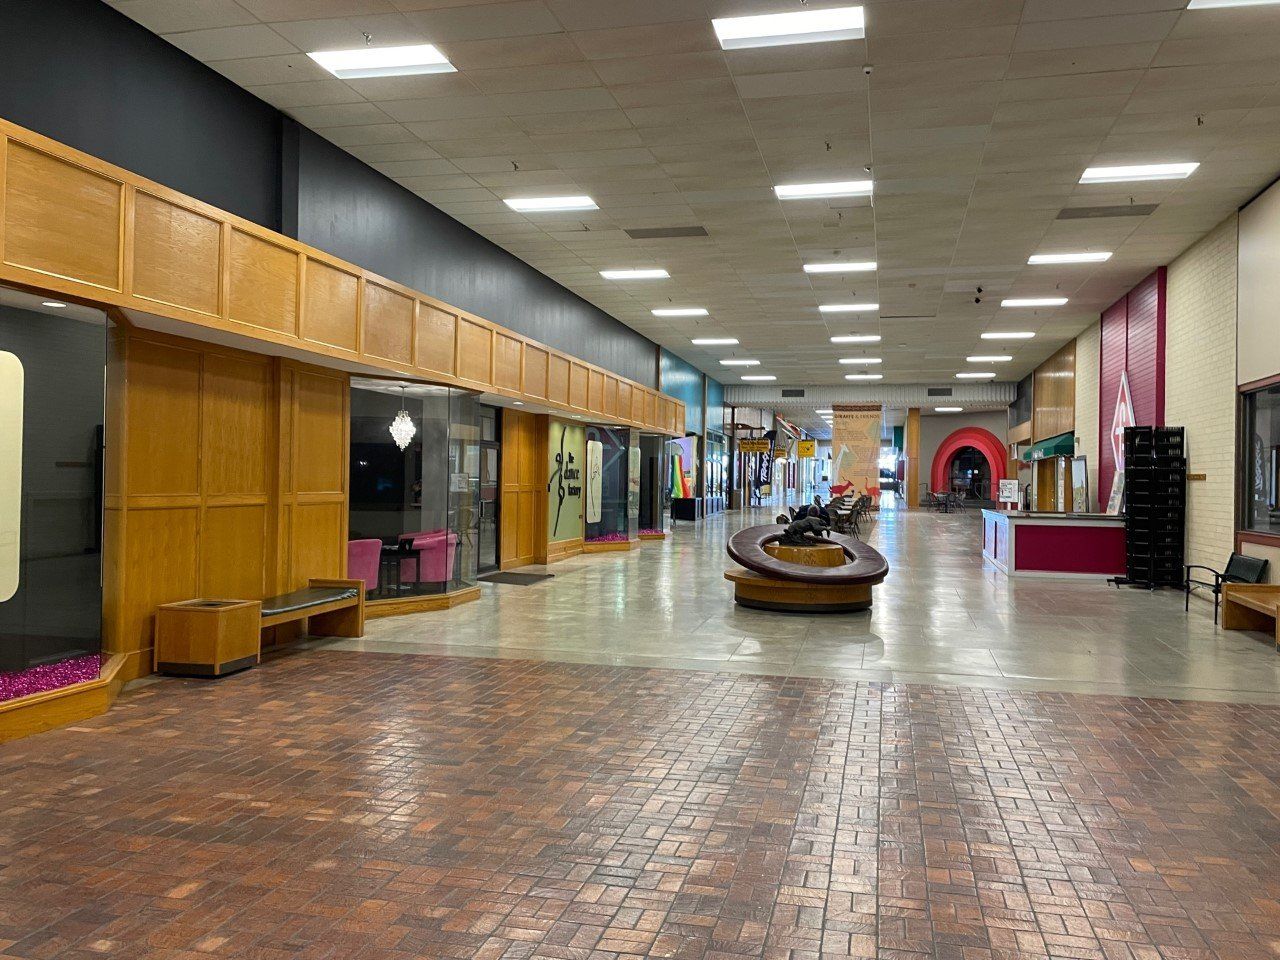 Inside Fairlawn Plaza Mall - Shopping Center - Shopping Mall